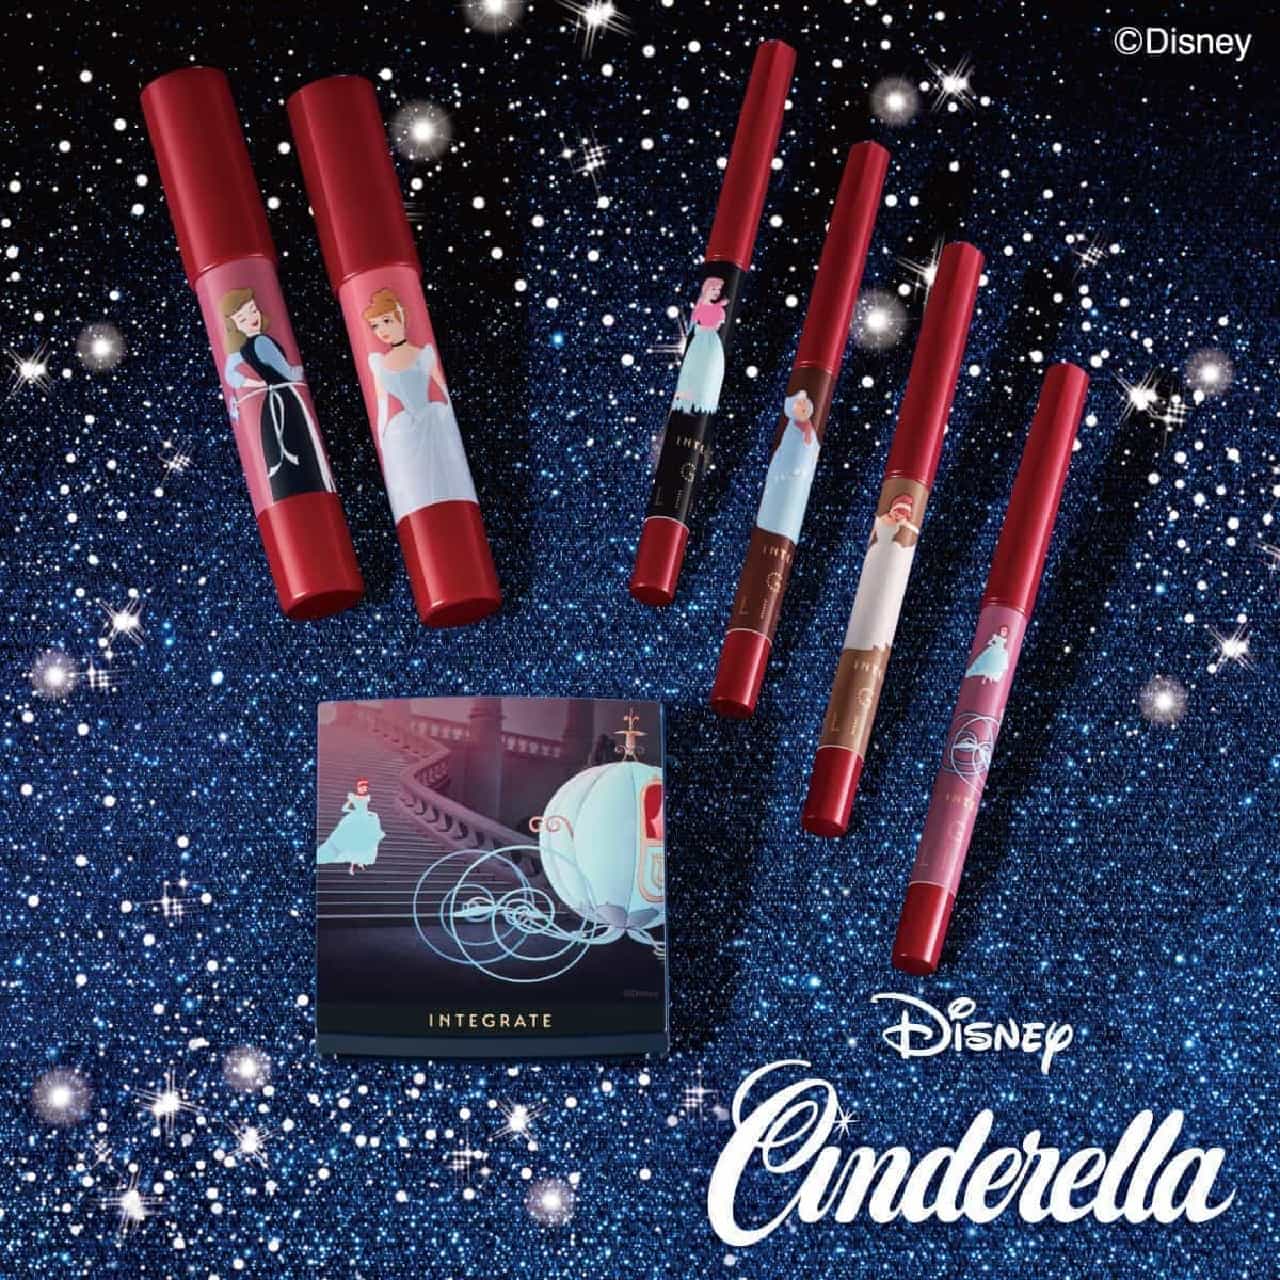 Integrated Cinderella limited design cosmetics